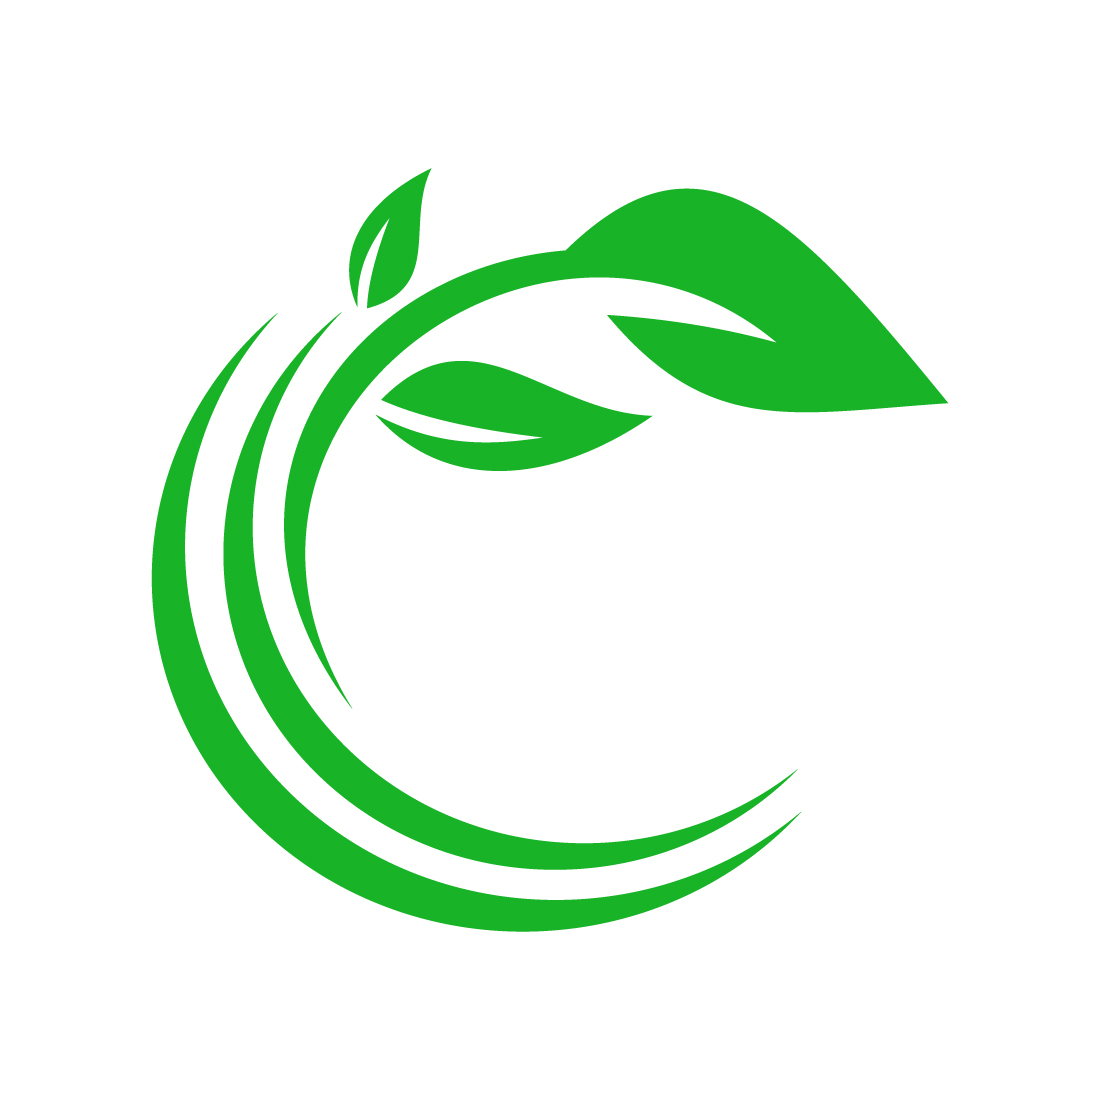 Leaf, plant, logo Green leaves, nature symbol, Vector design template preview image.